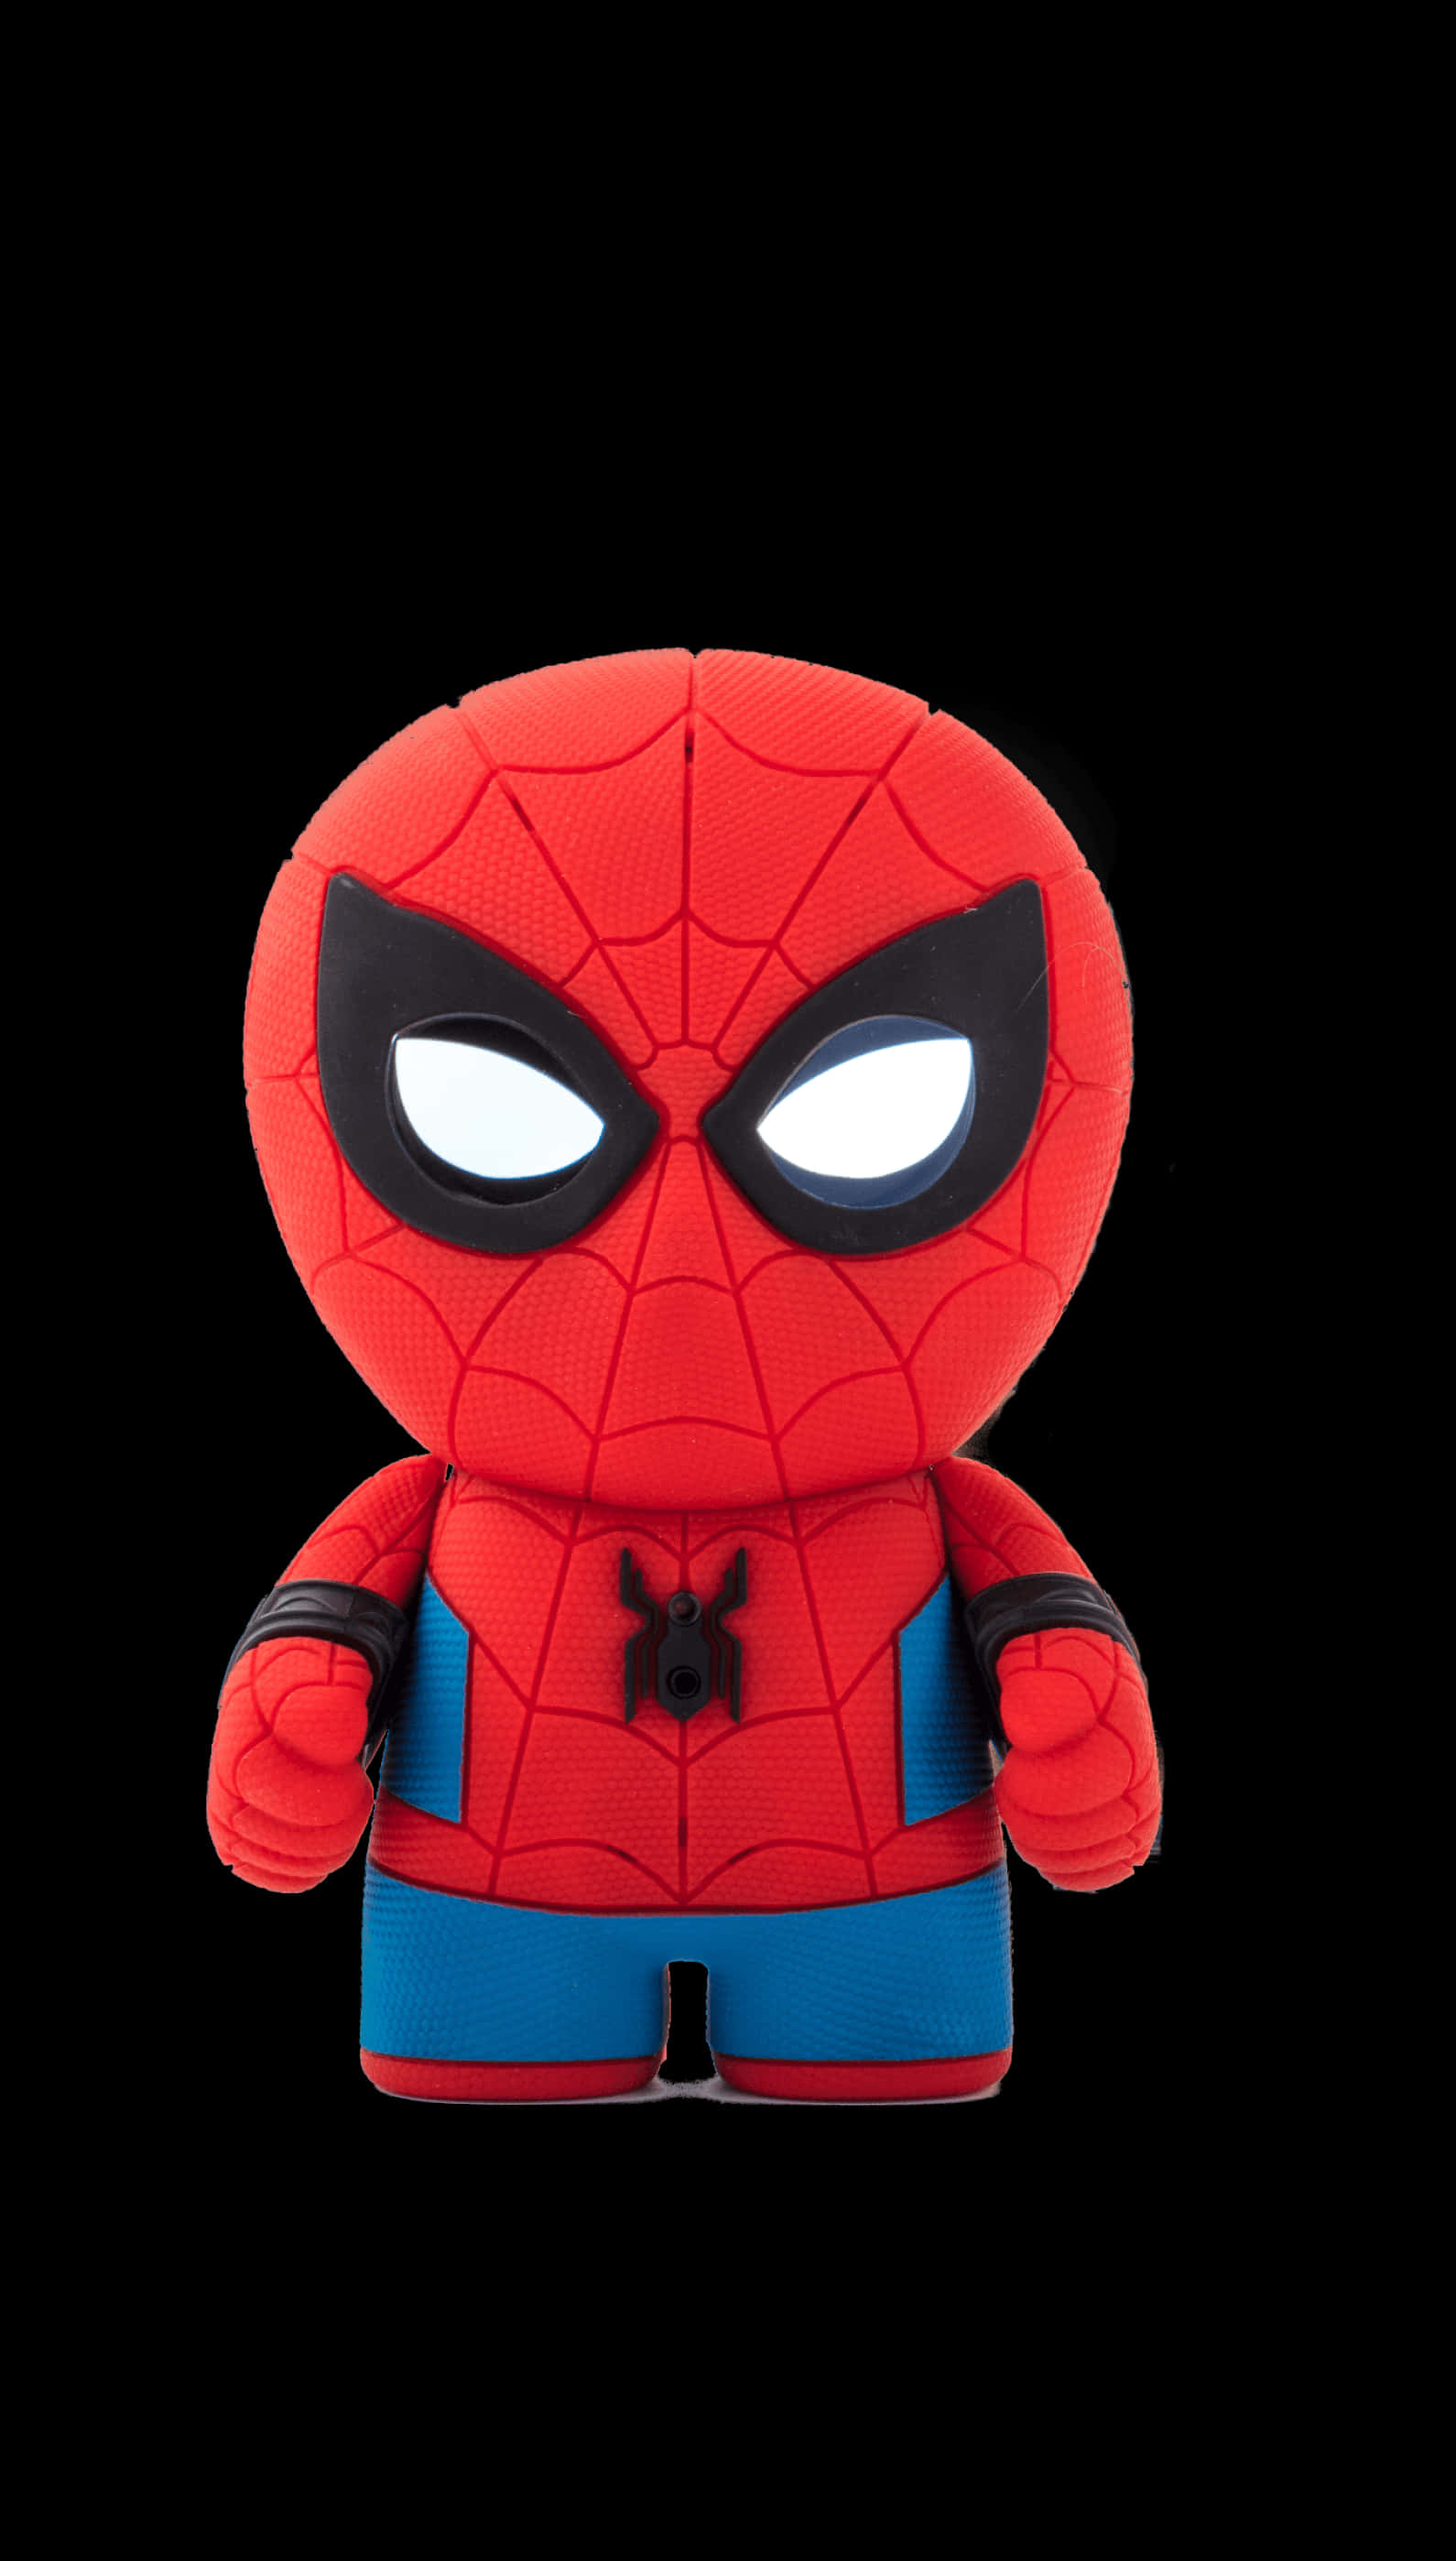 Spiderman Plush Toy Black Background